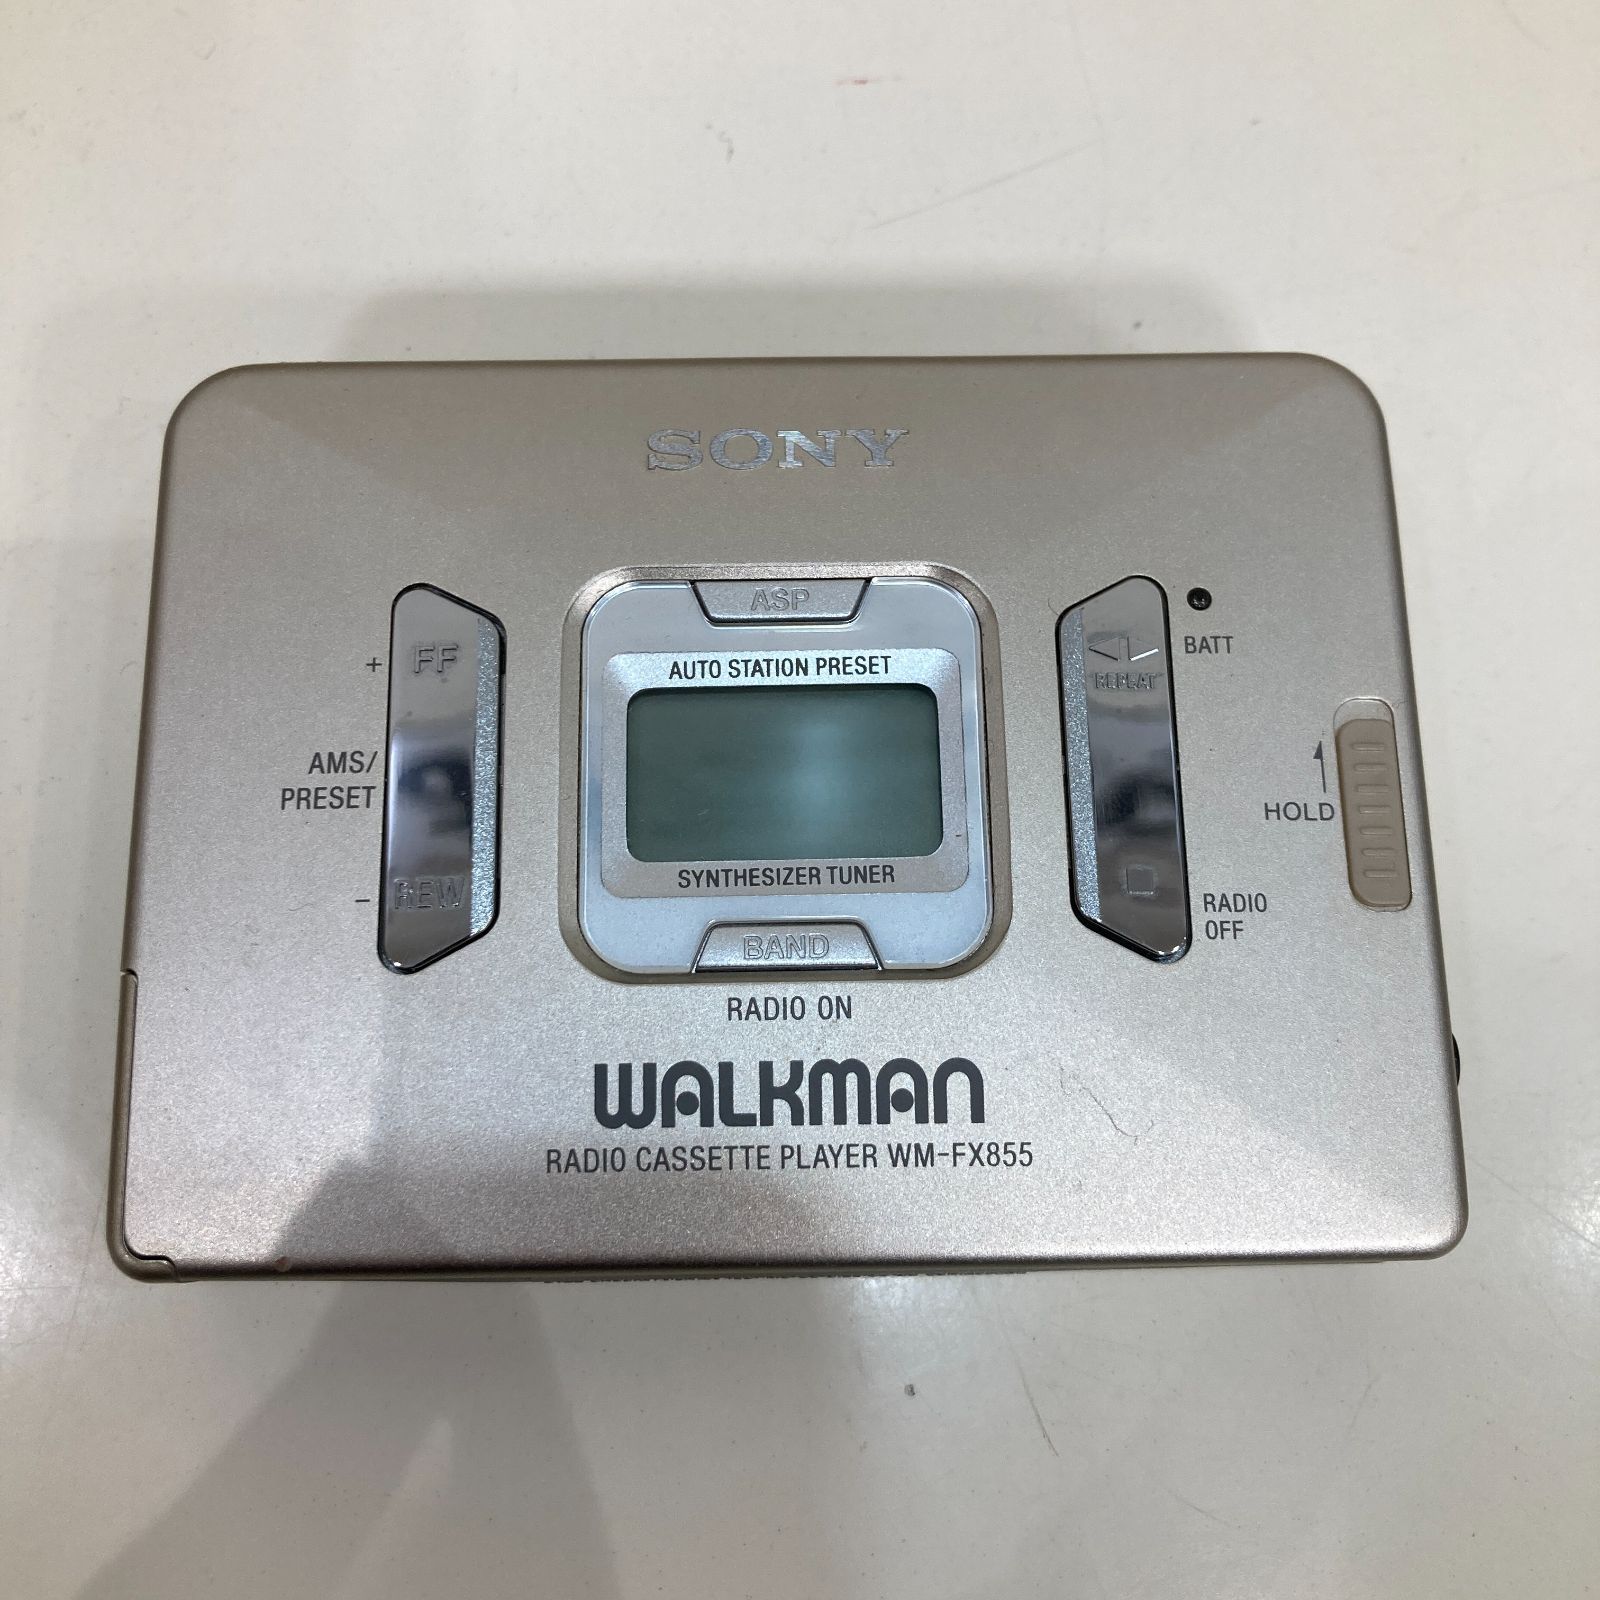 A【ヴィンテージ】SONY WALKMAN ウォークマン WM-FX855 ラジカセ 